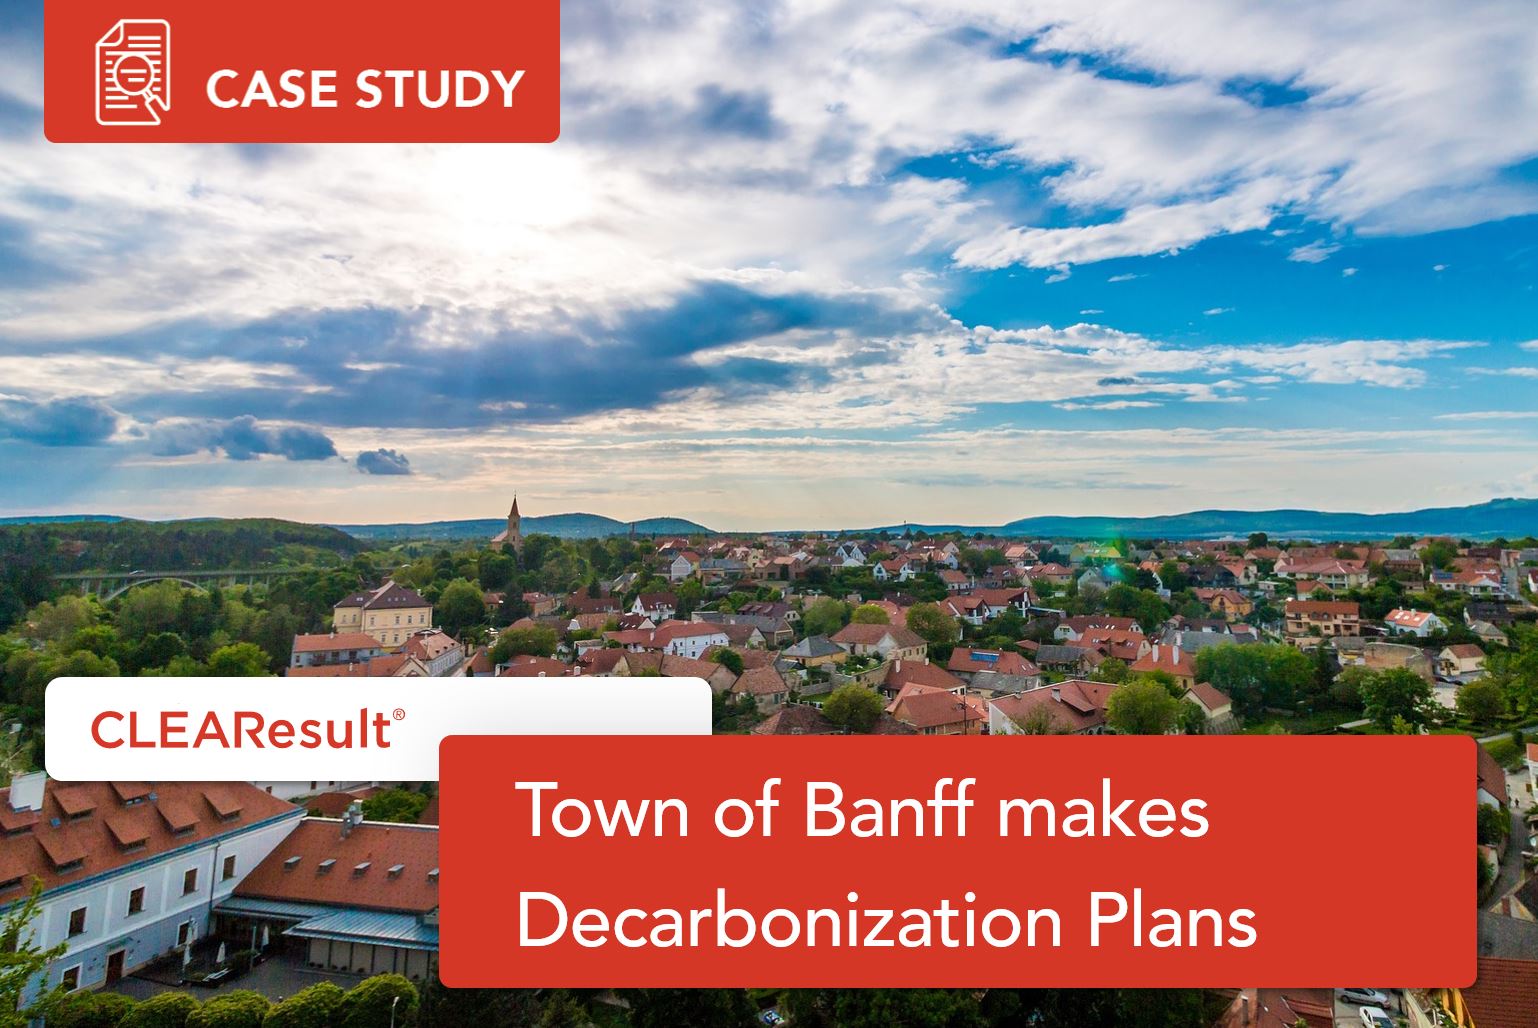 Case Study: Town of Banff makes Decarbonization Plans